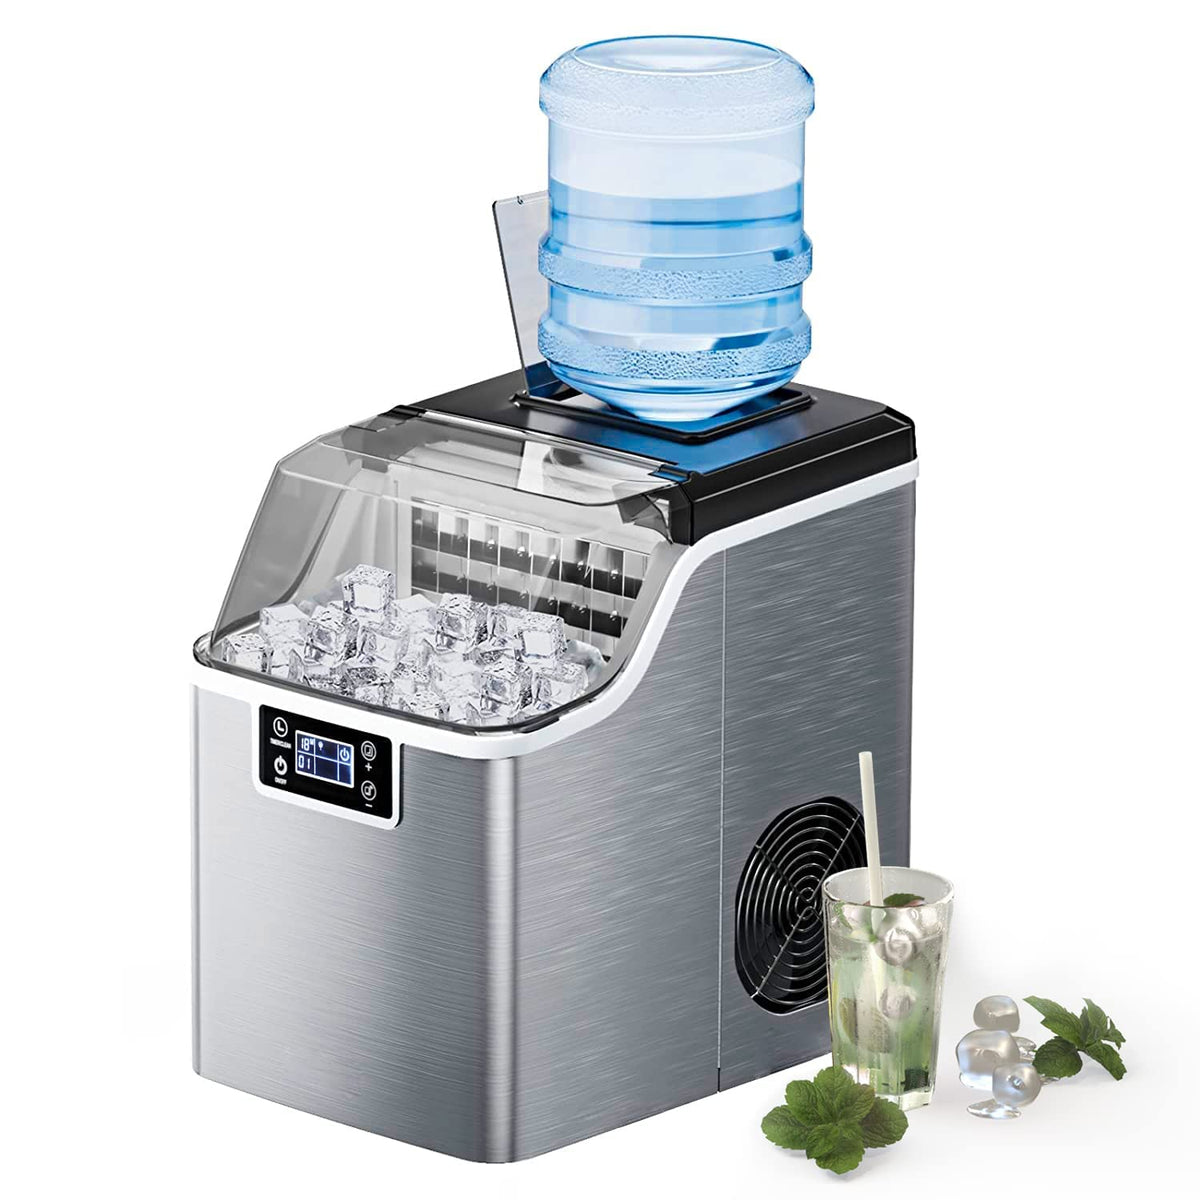 Countertop Ice Maker Machine, 45 Lbs/24H, 24 Pcs/13 Mins, 2 Ways to Add Water